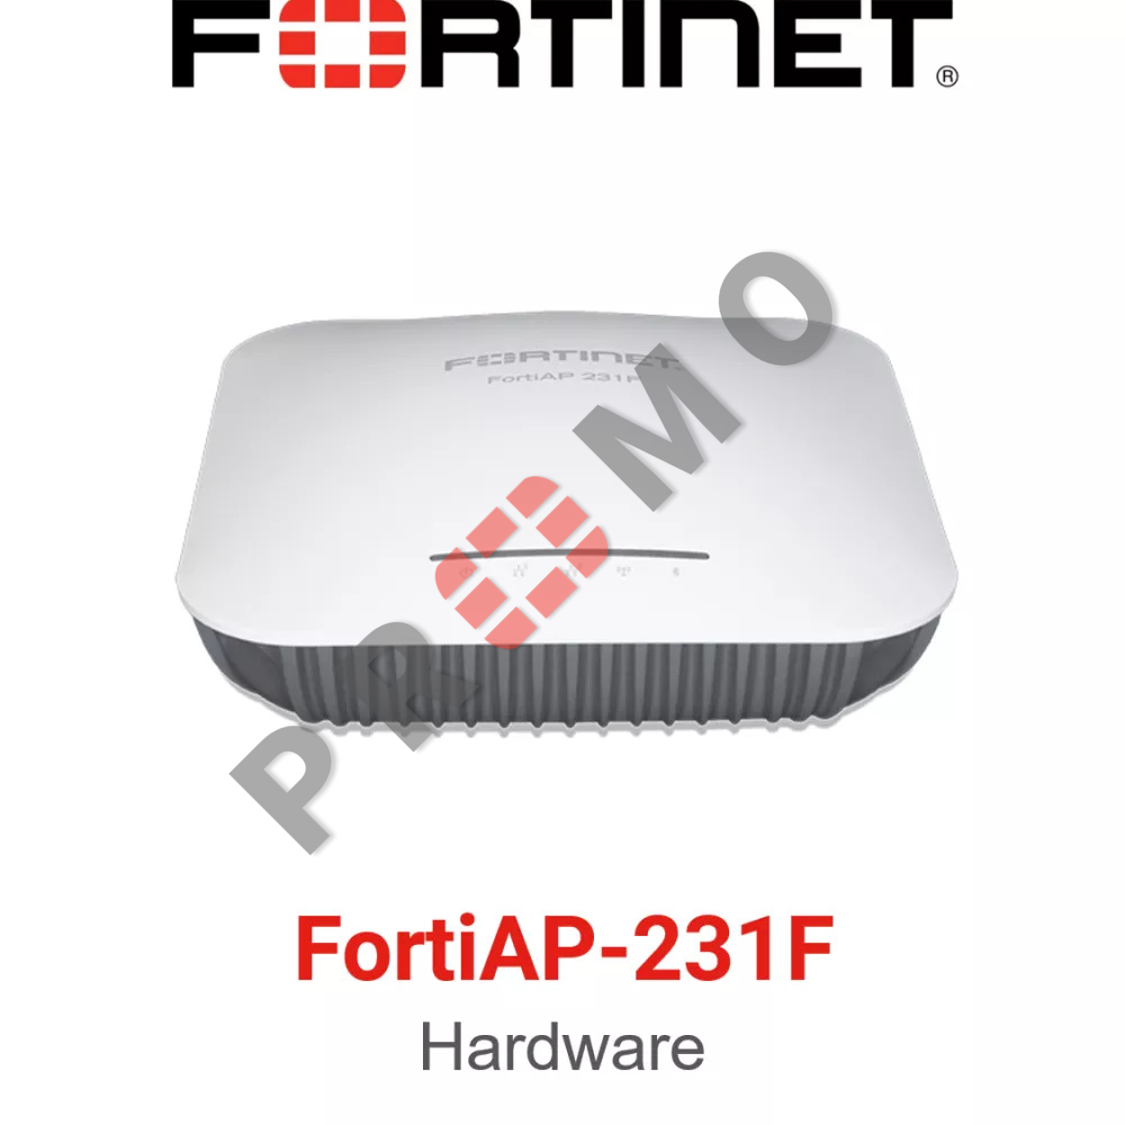 Fortinet FortiAP-231F